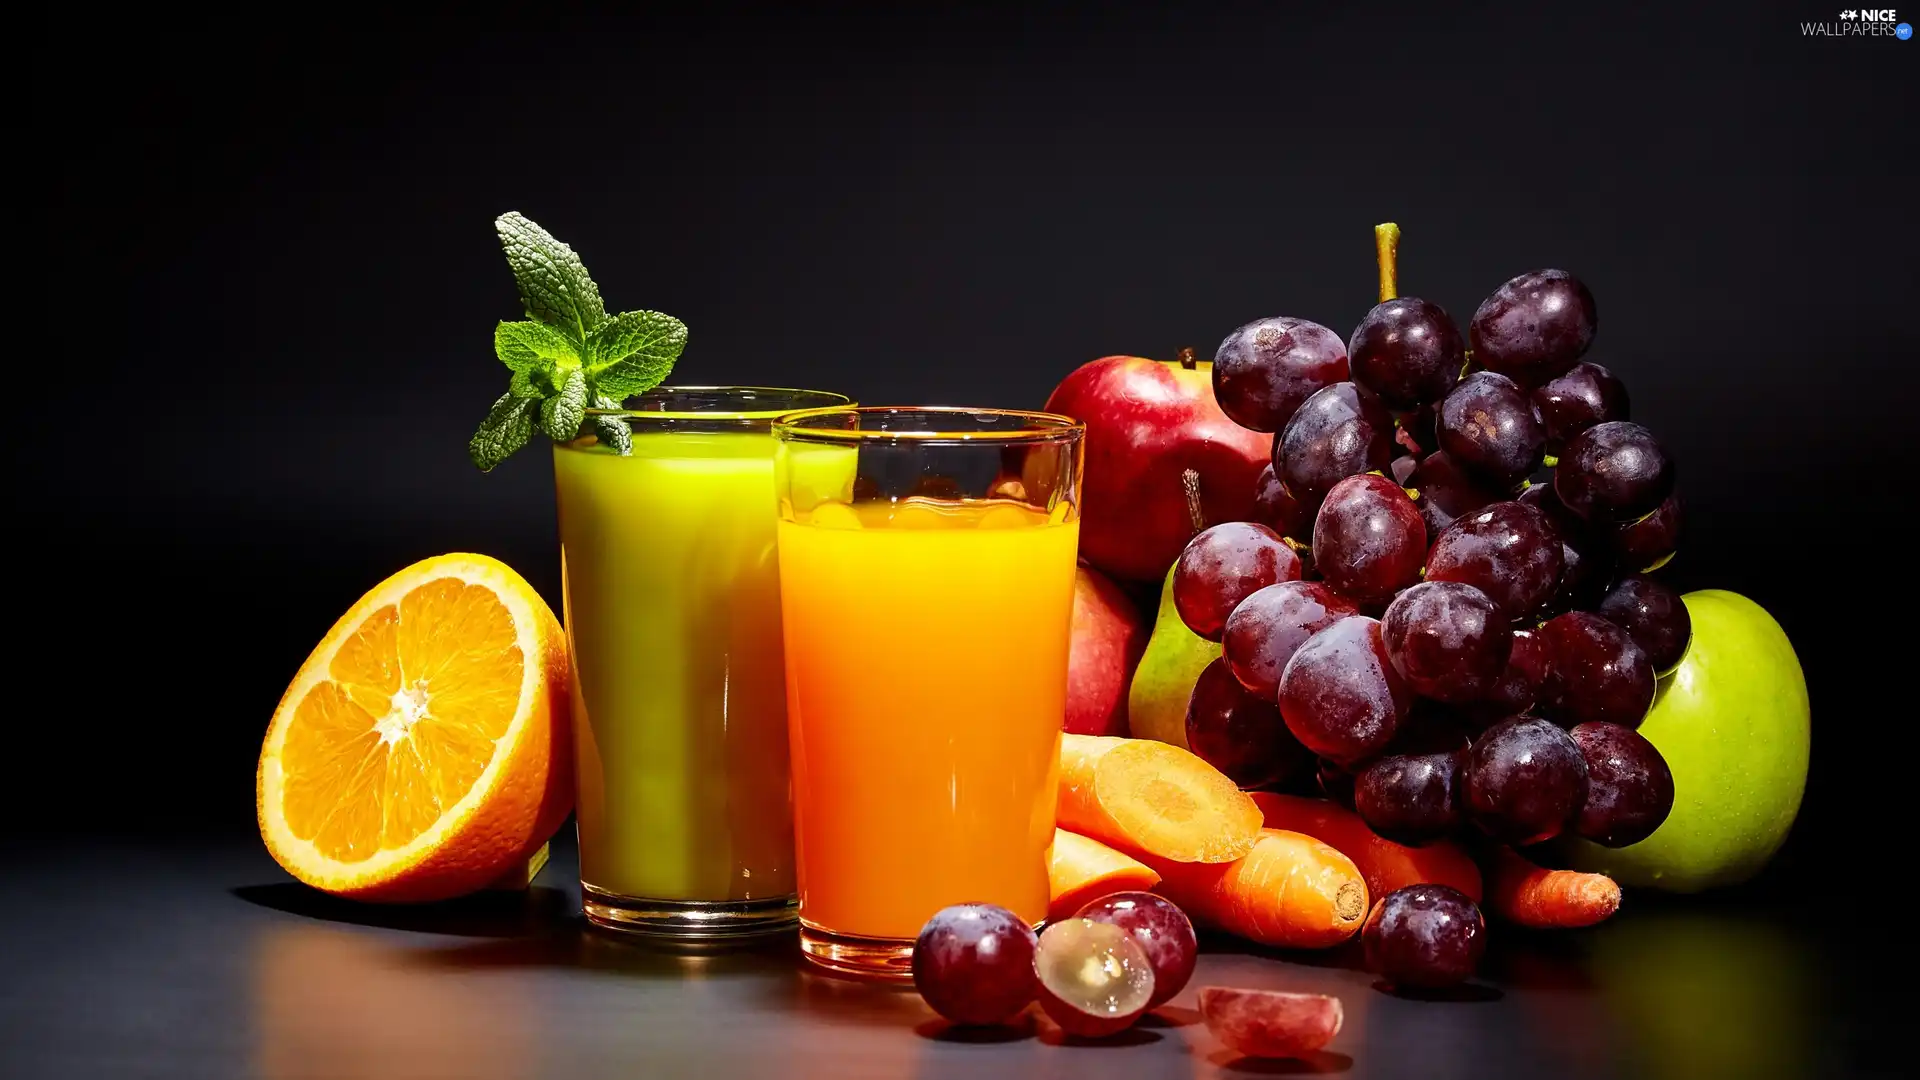 grape, juice, carrots, orange, apples, Glass